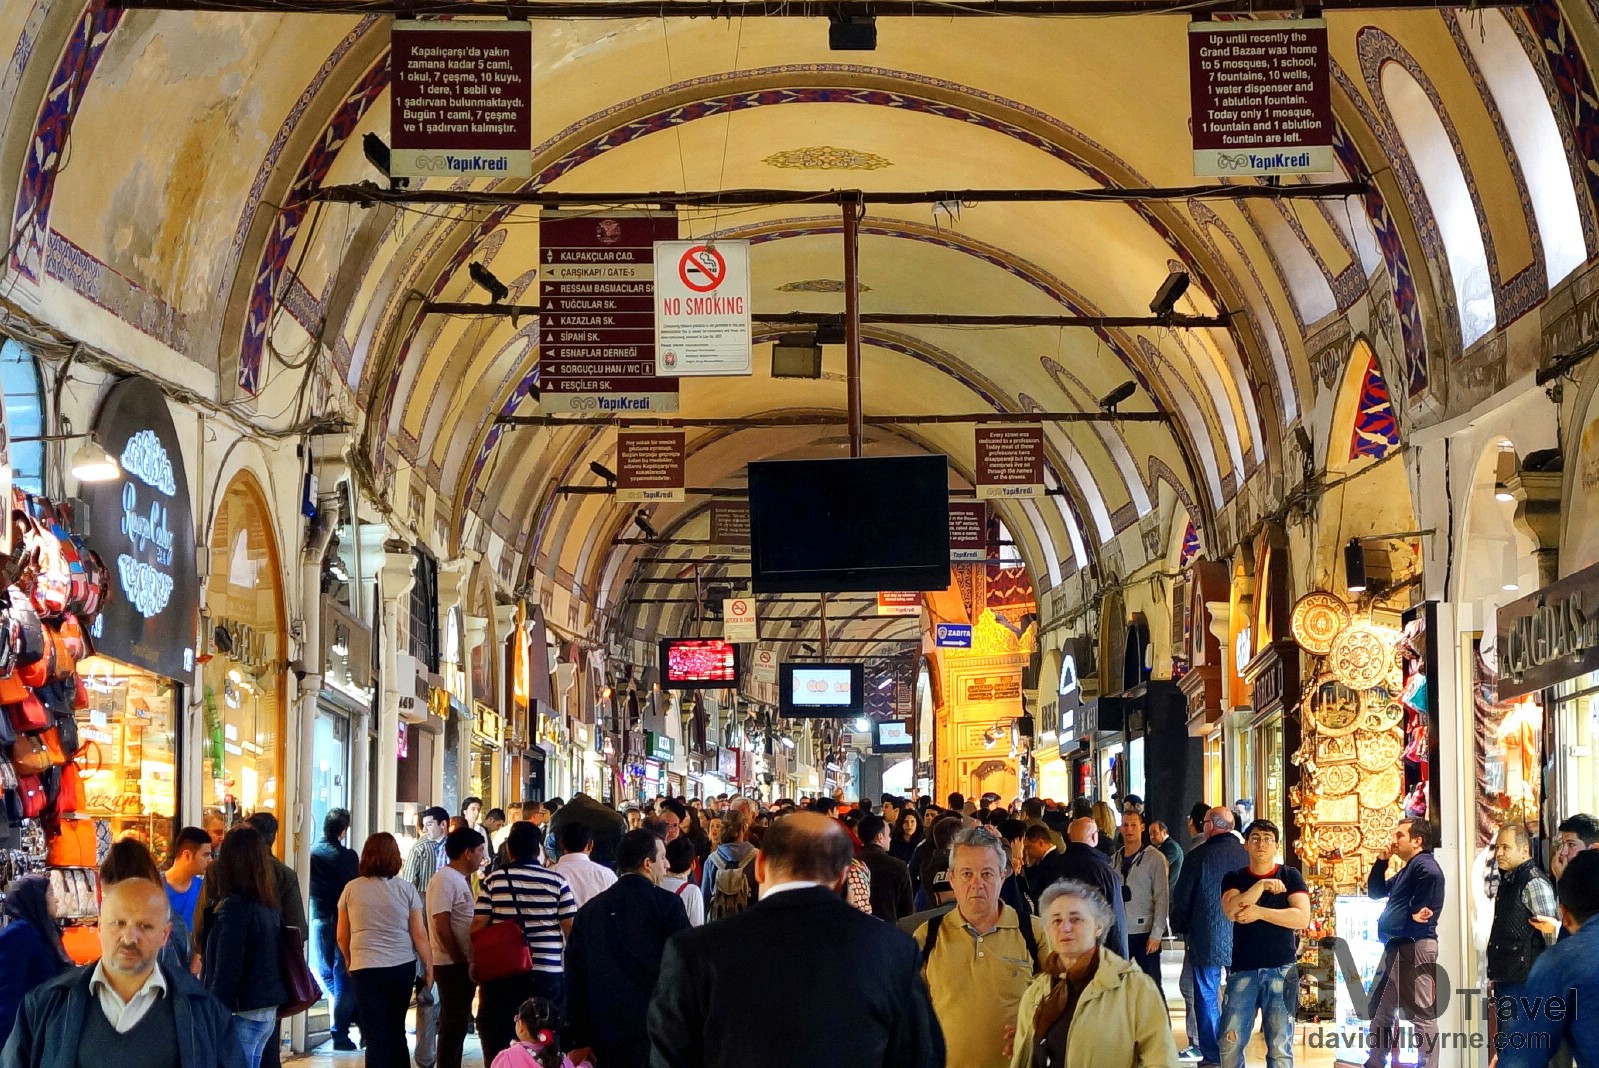 The Grand Bazaar, Istanbul, Turkey. April 10th, 2014.